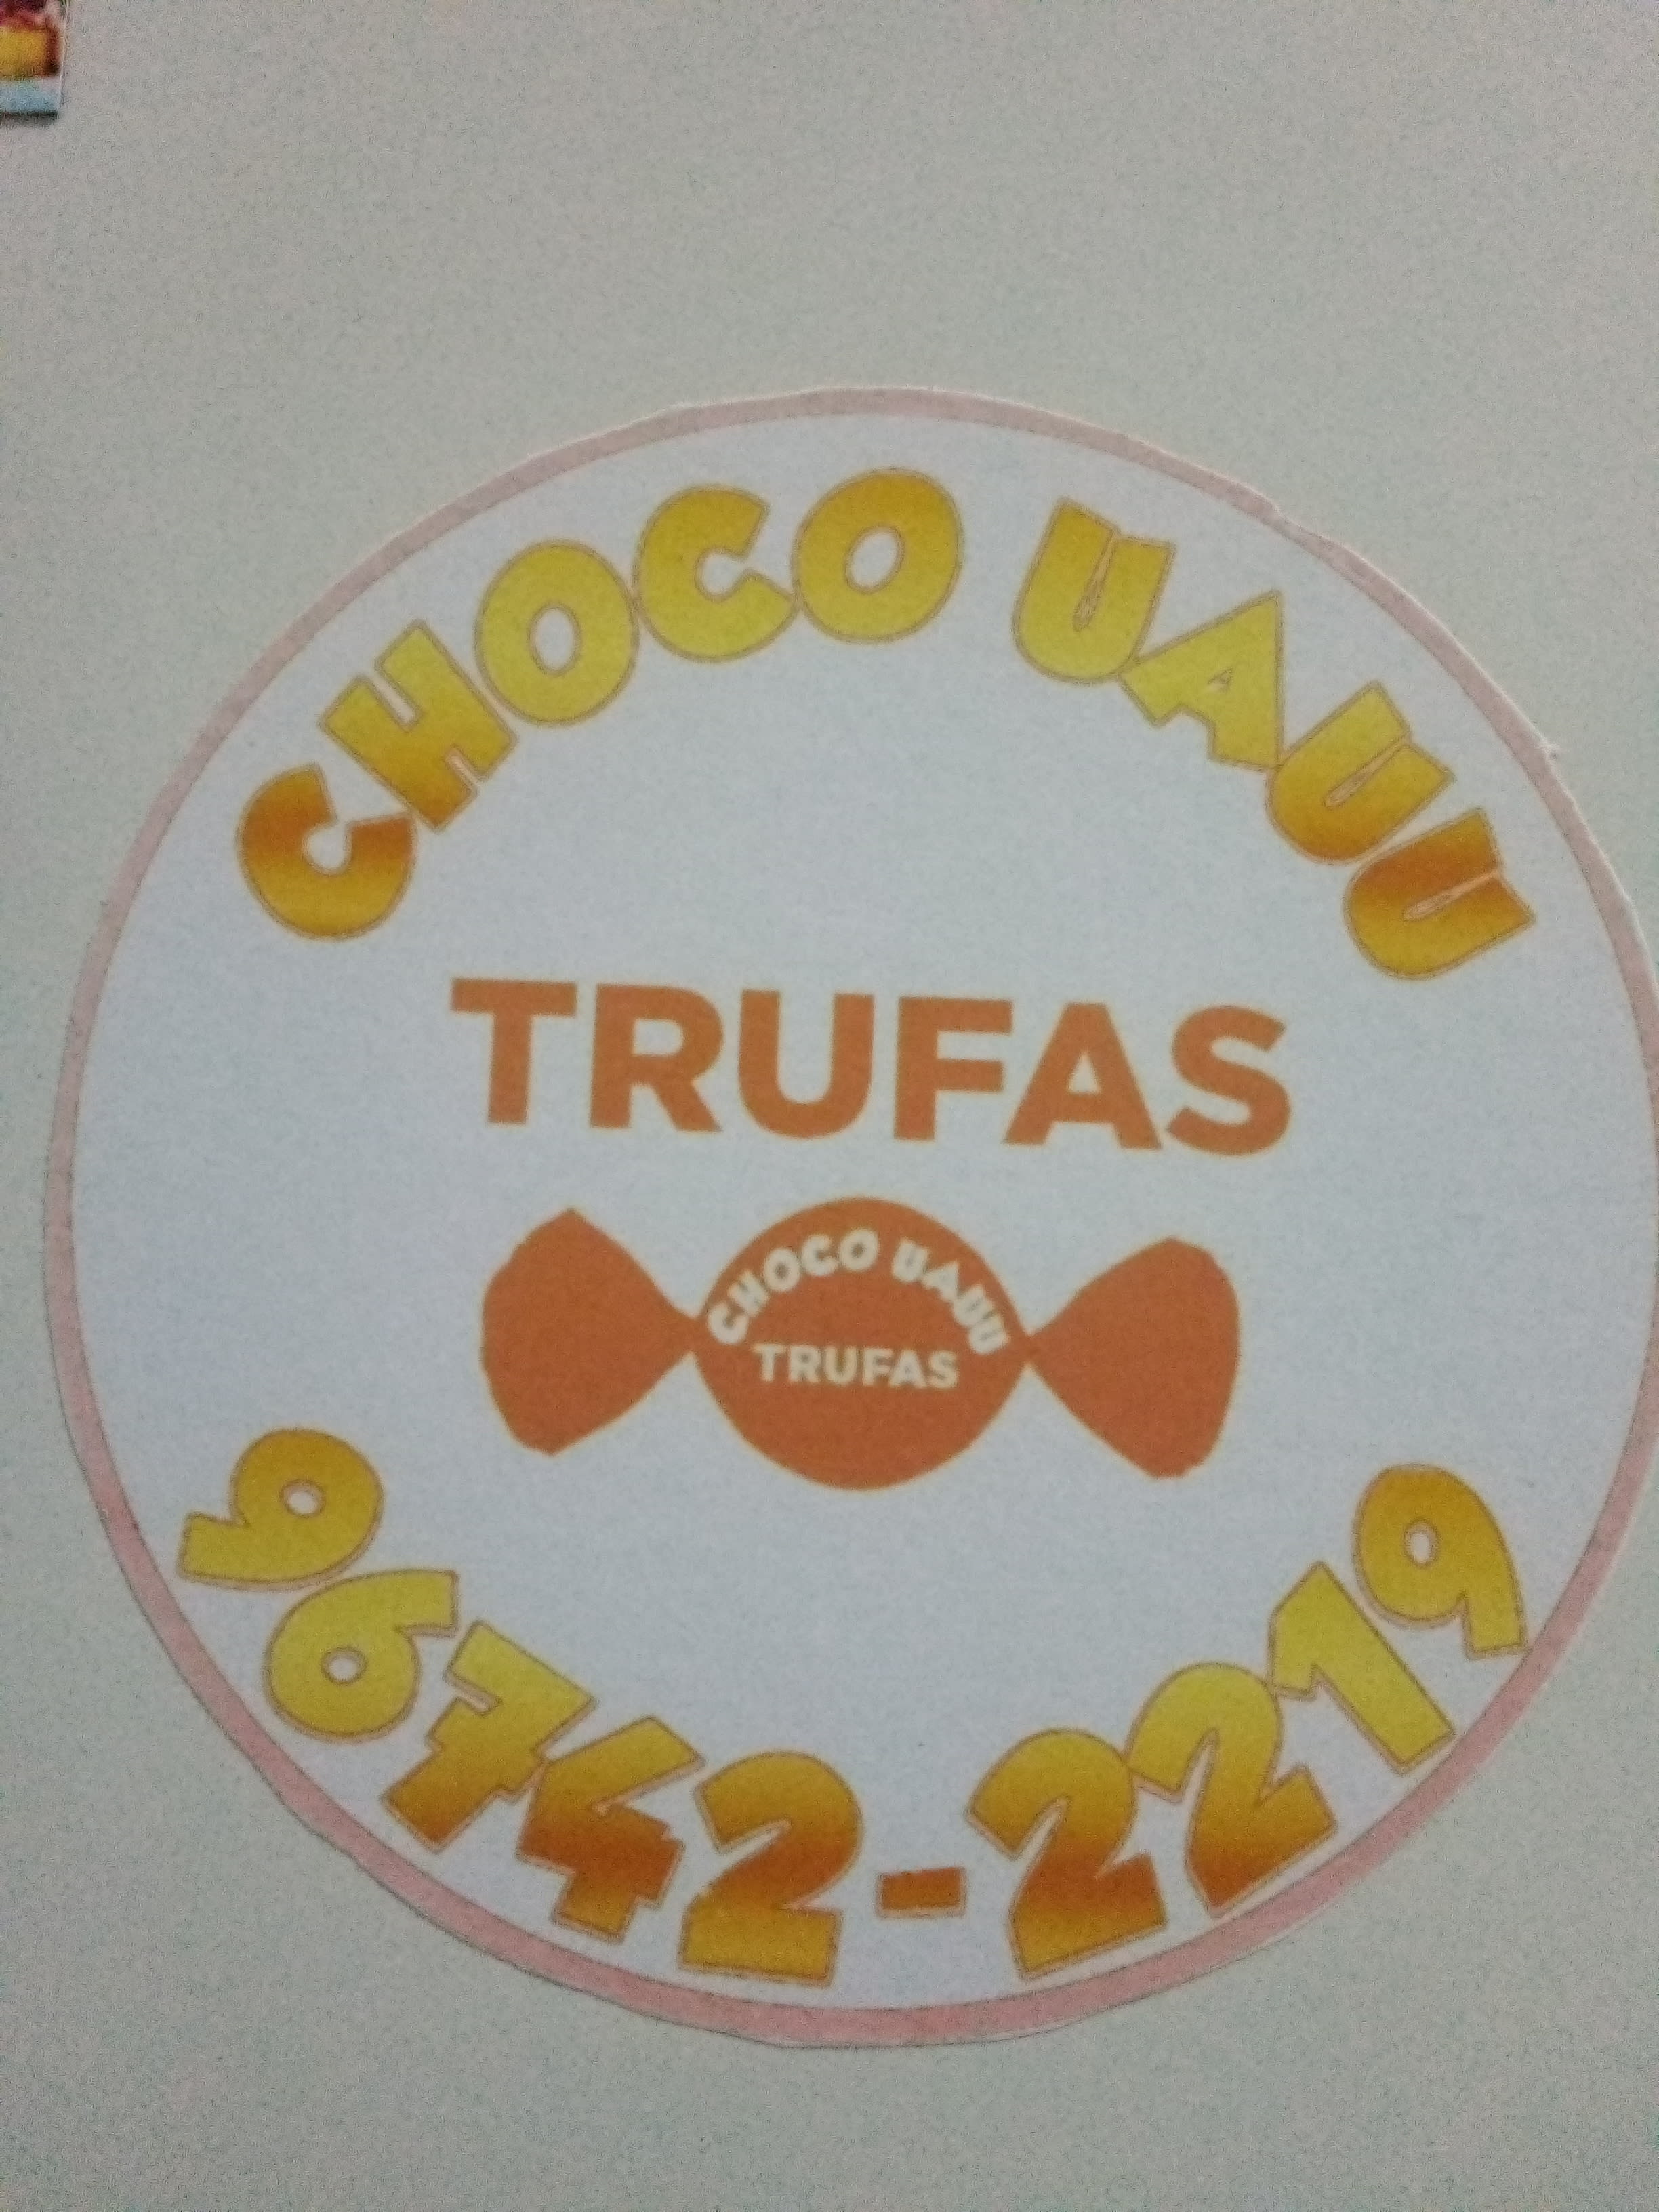 Choco Uauu